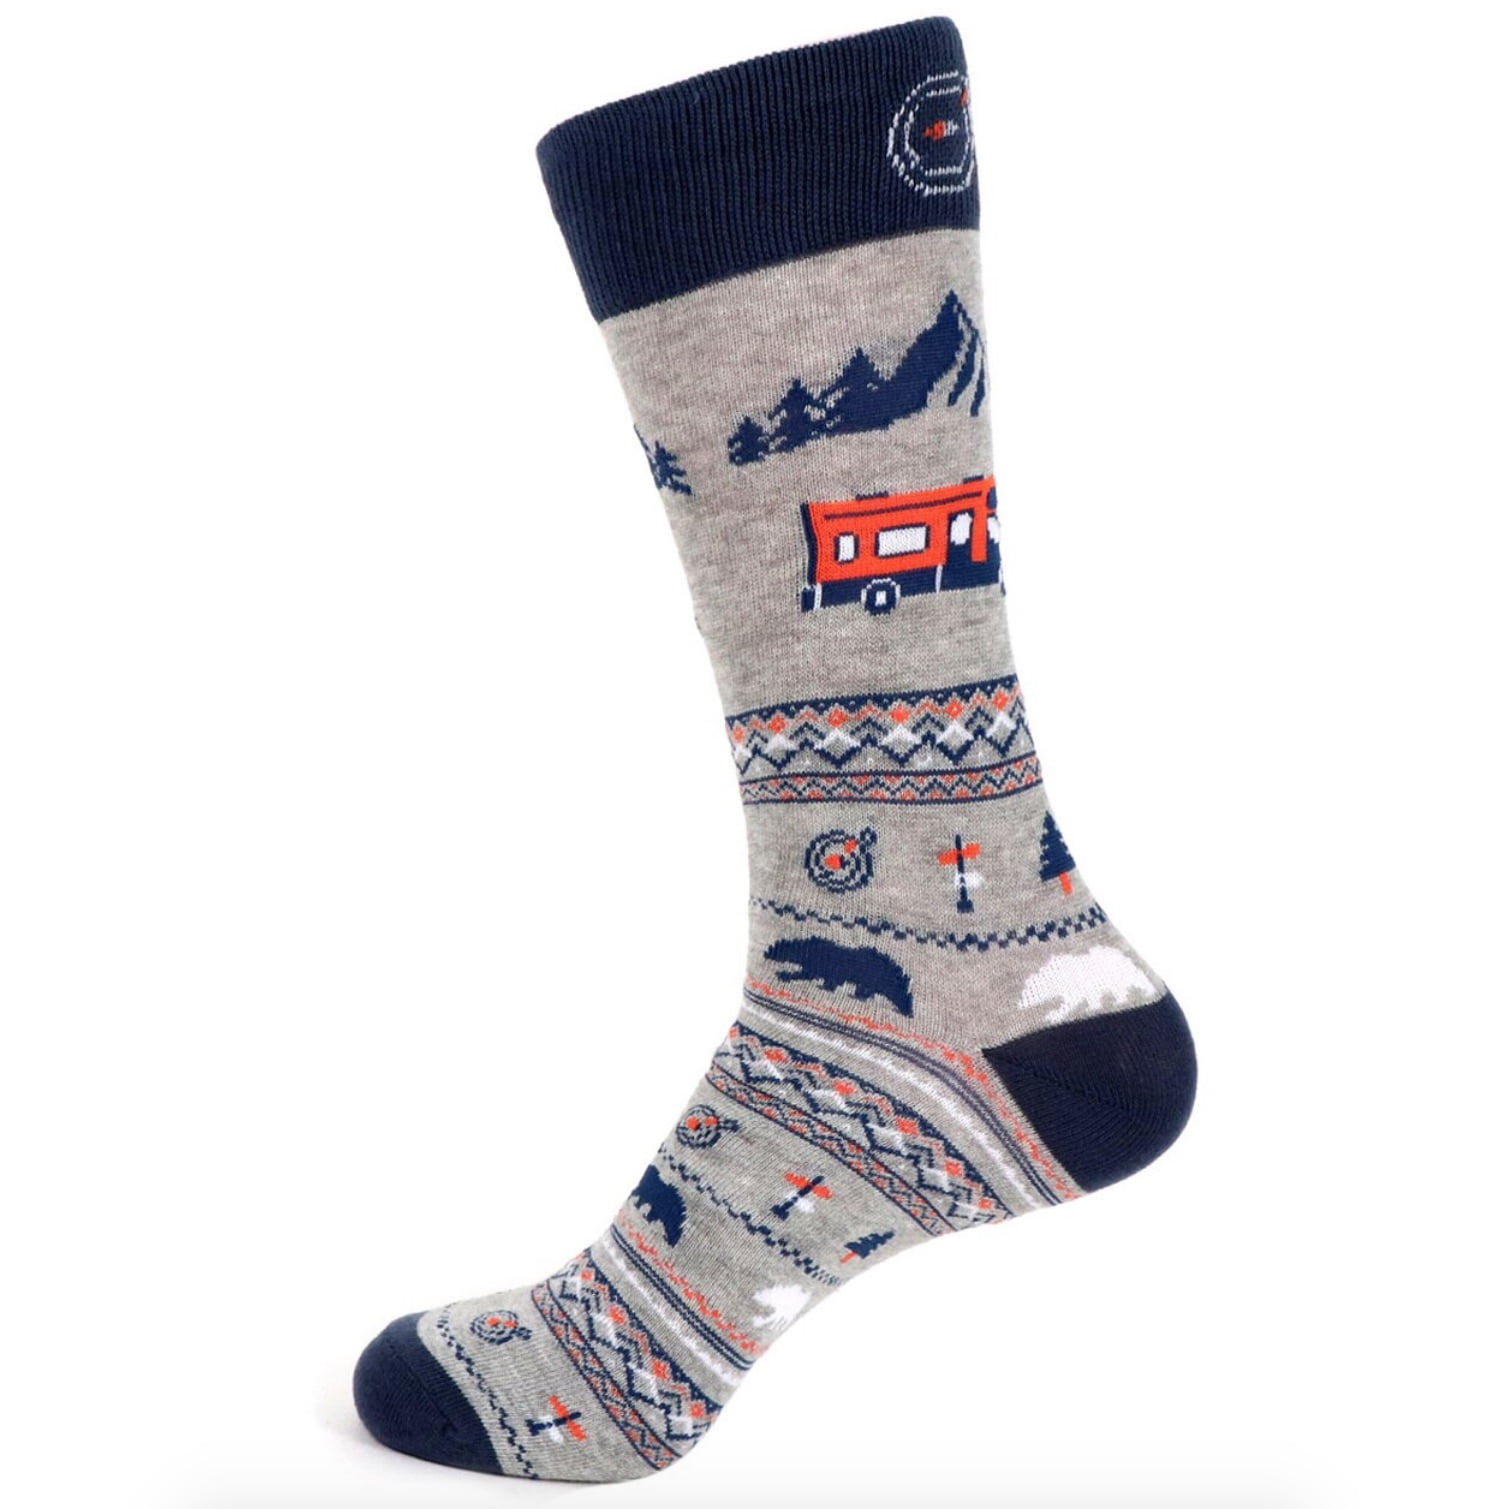 12 Pairs Mens USA Logo Ankle Socks Sport Cotton American Theme 1 Dozen Pack